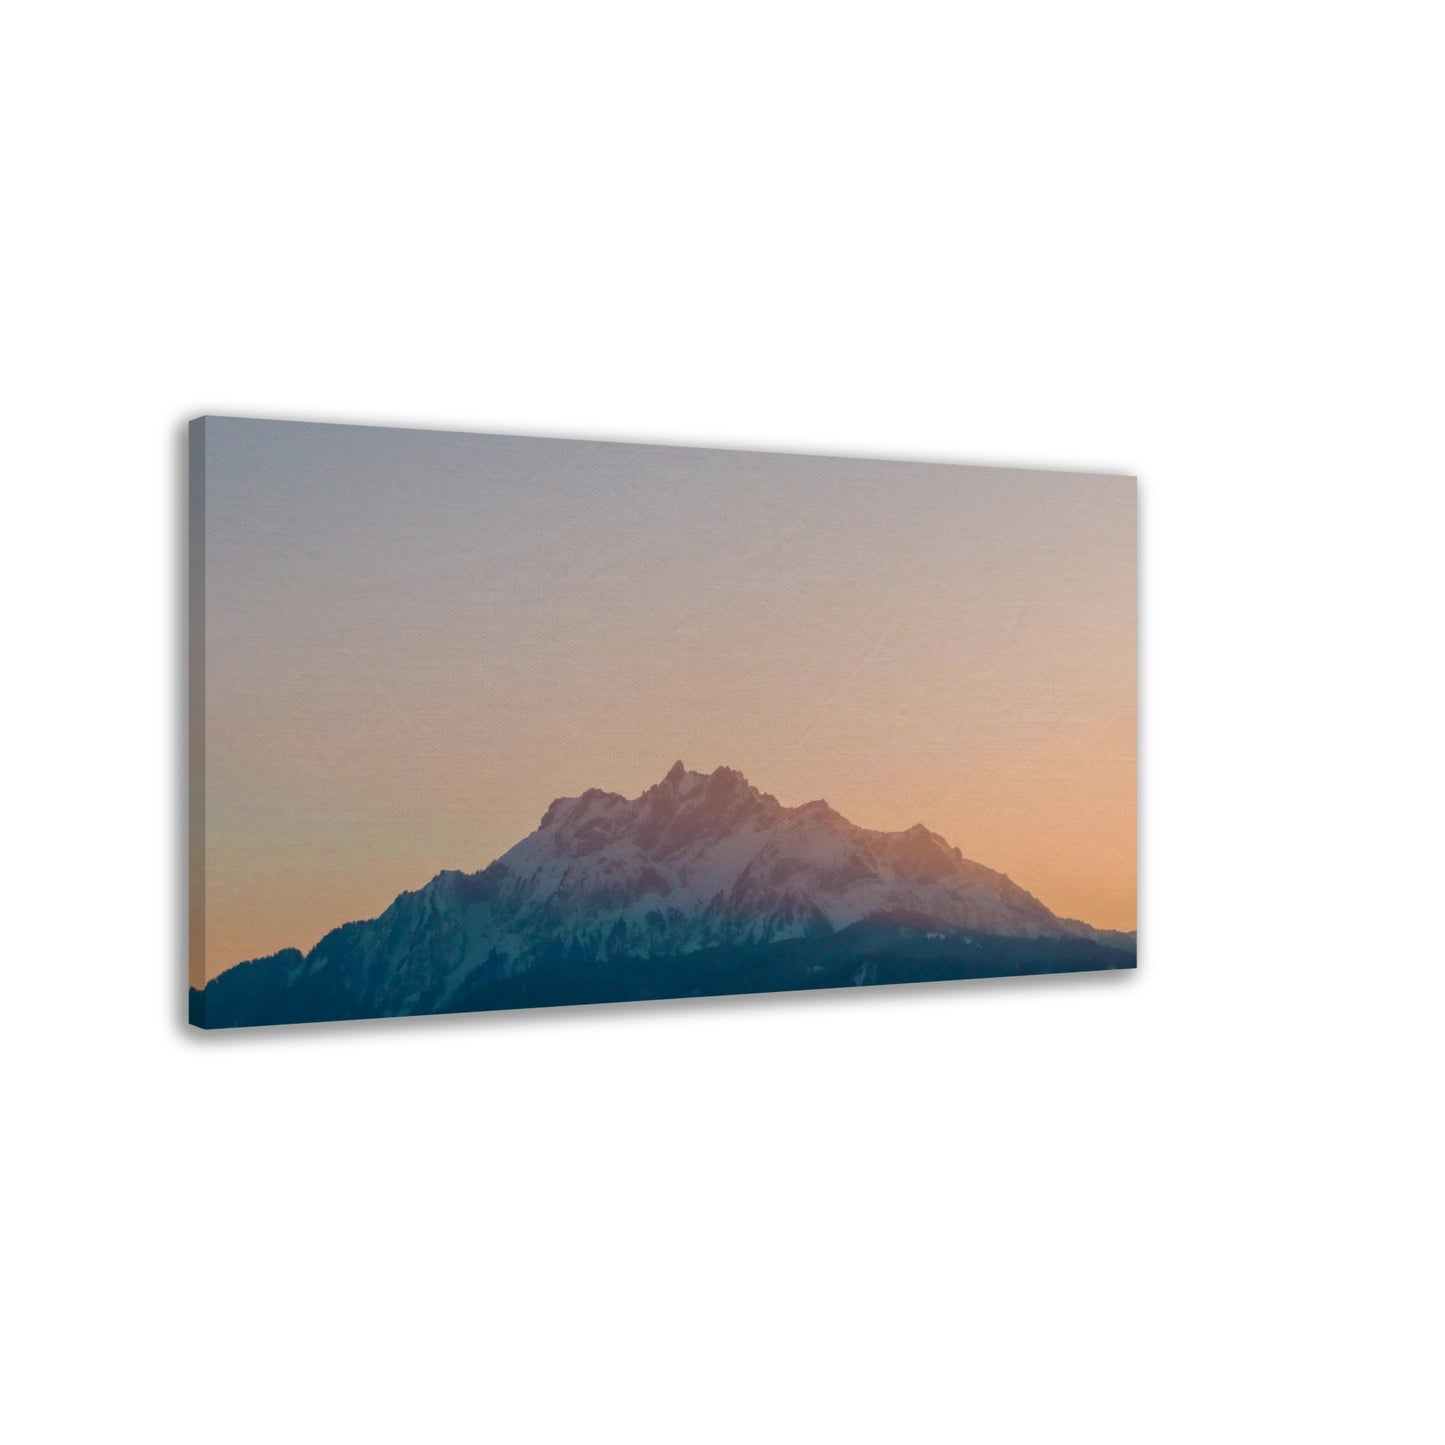 Swiss Alpine magic: Pilatus at sunset - canvas